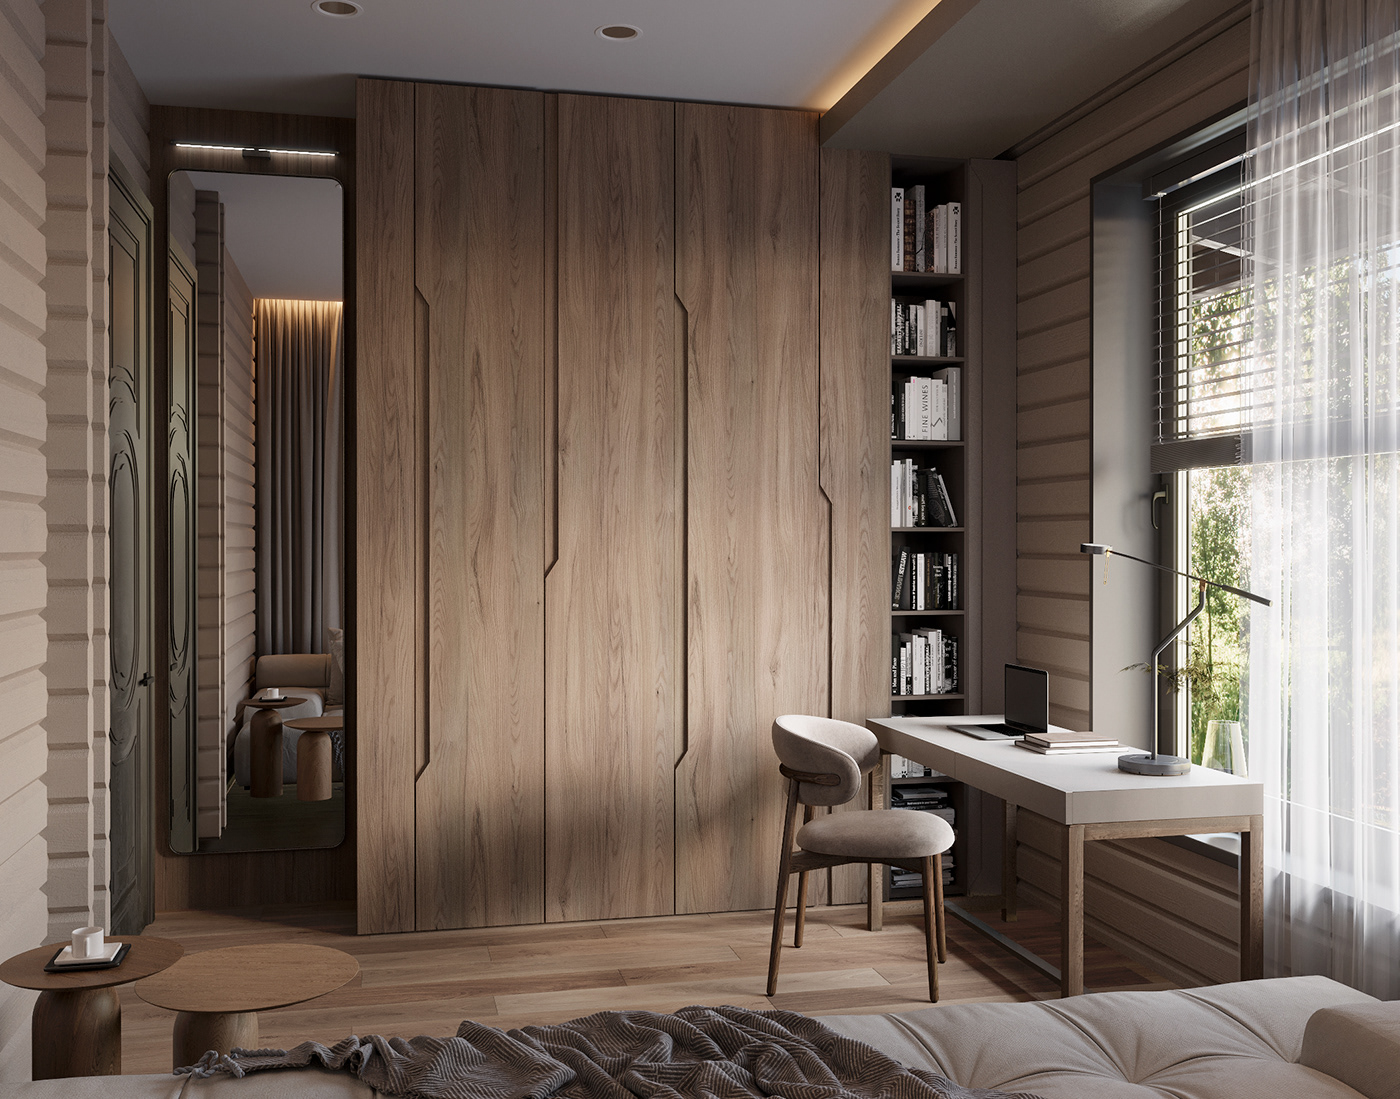 Interior bedroom corona design visualization Woodhouse house cozy interior